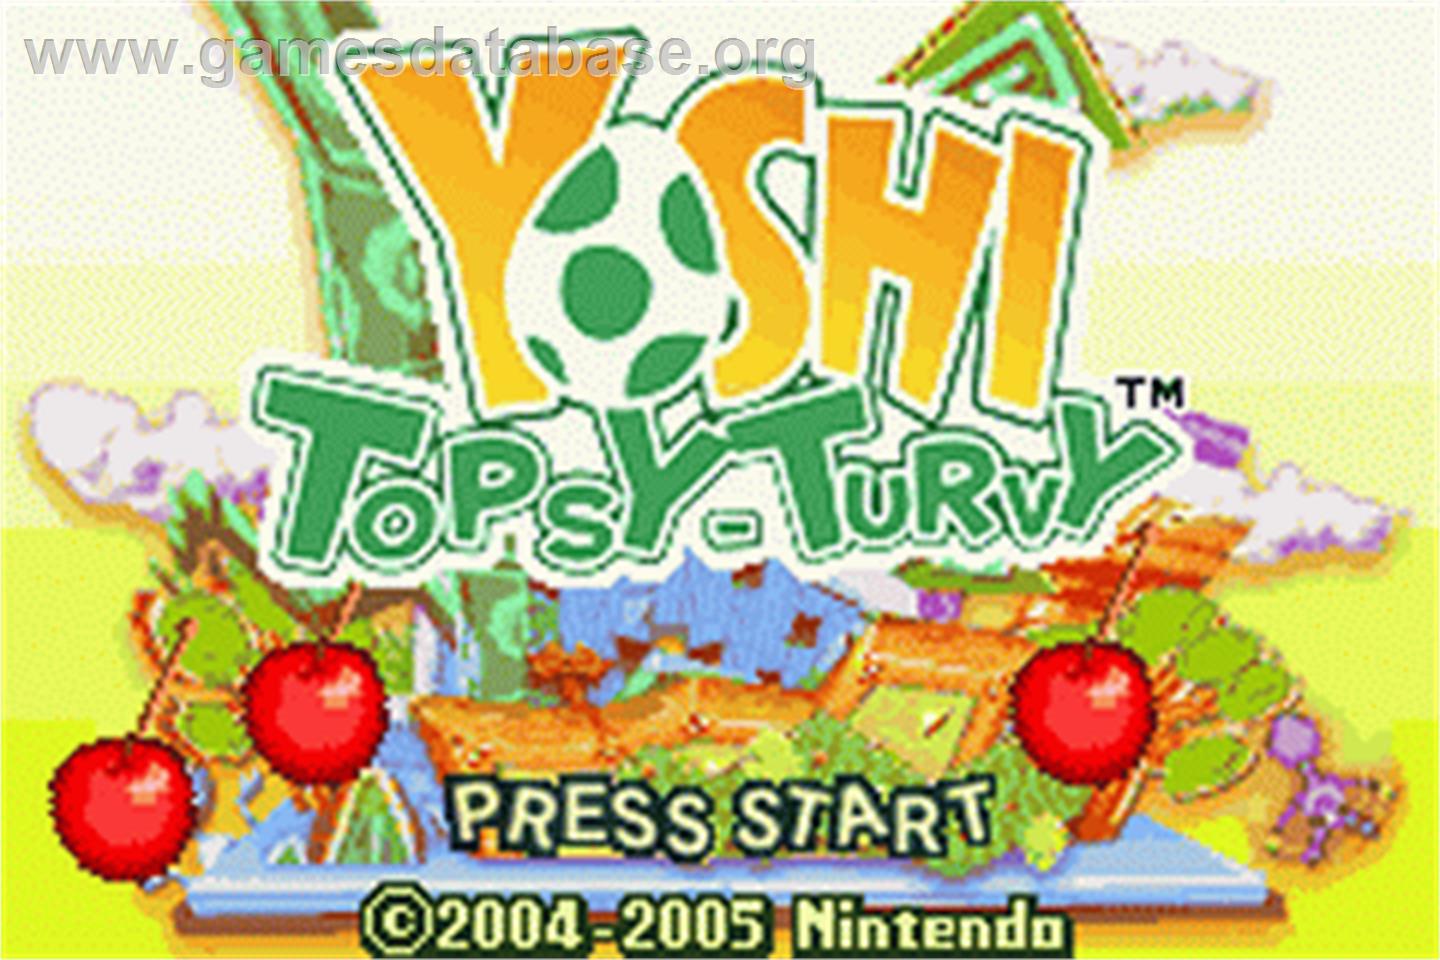 Yoshi Topsy-Turvy - Nintendo Game Boy Advance - Artwork - Title Screen